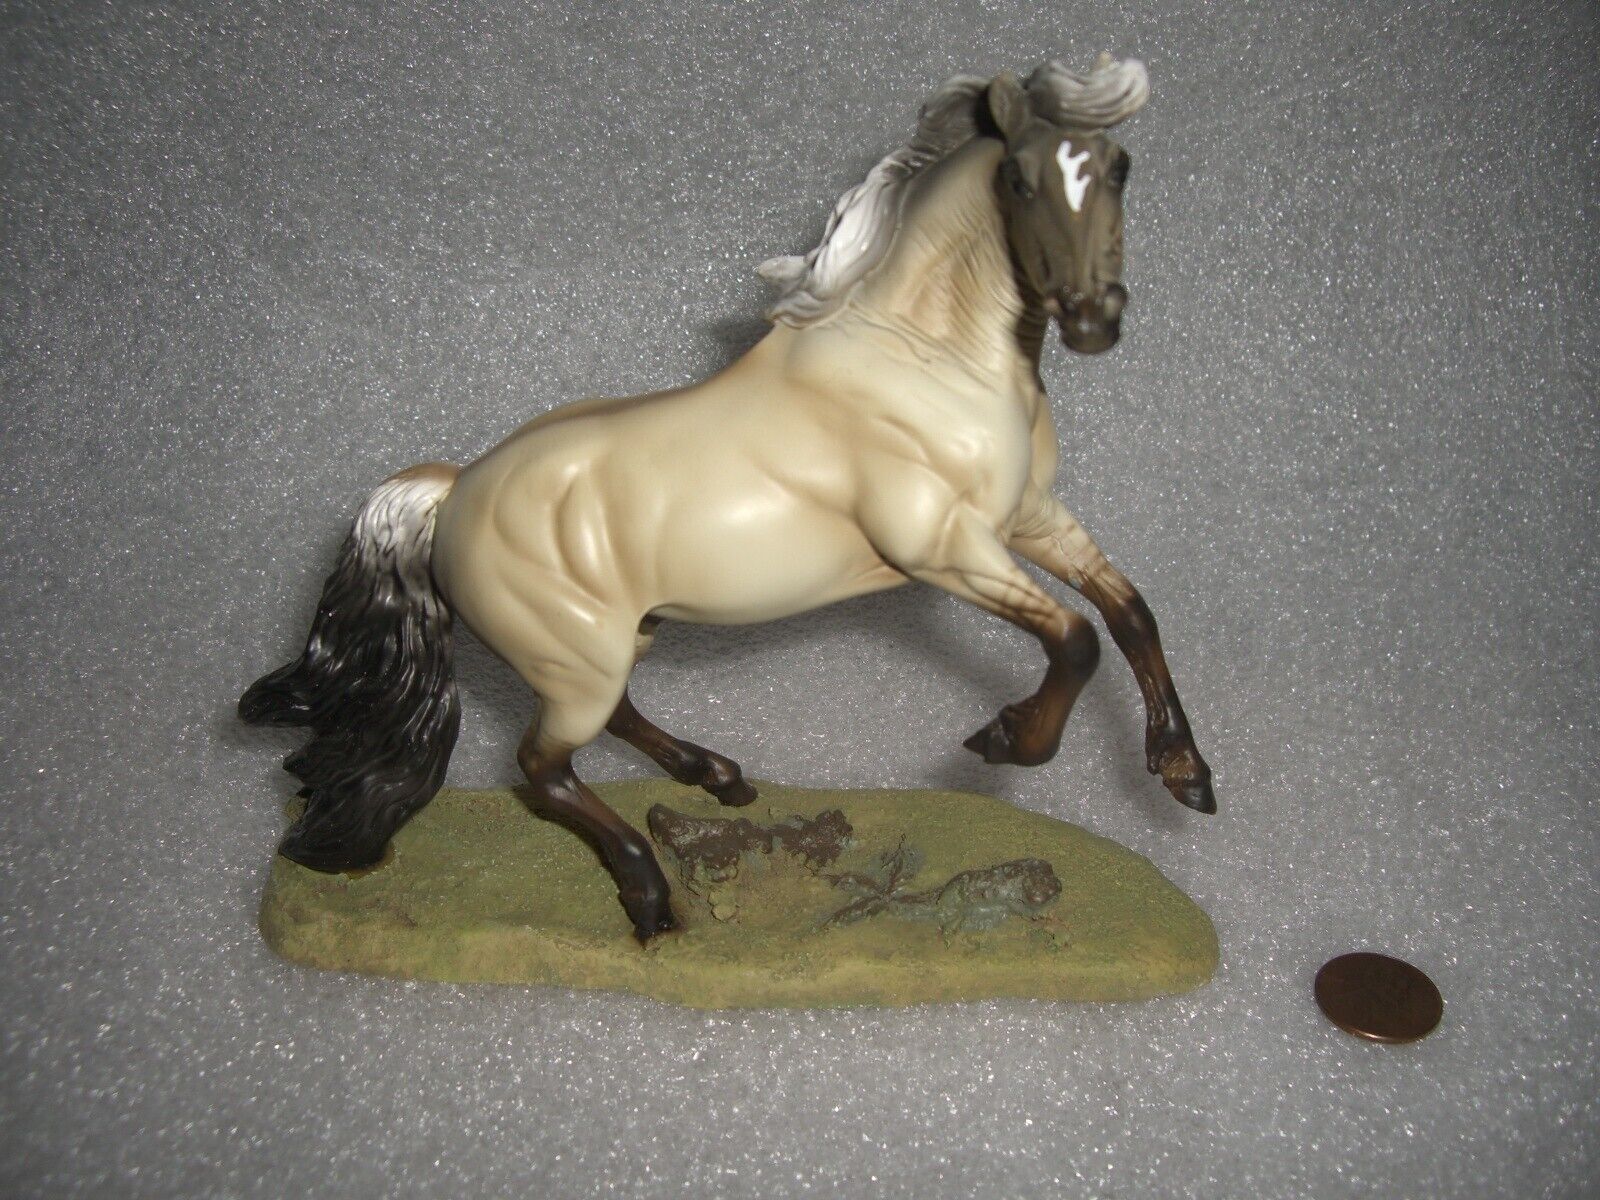 Breyer Breeds of the World Mustang Gallery Resin w/ box 2012-2014 retired